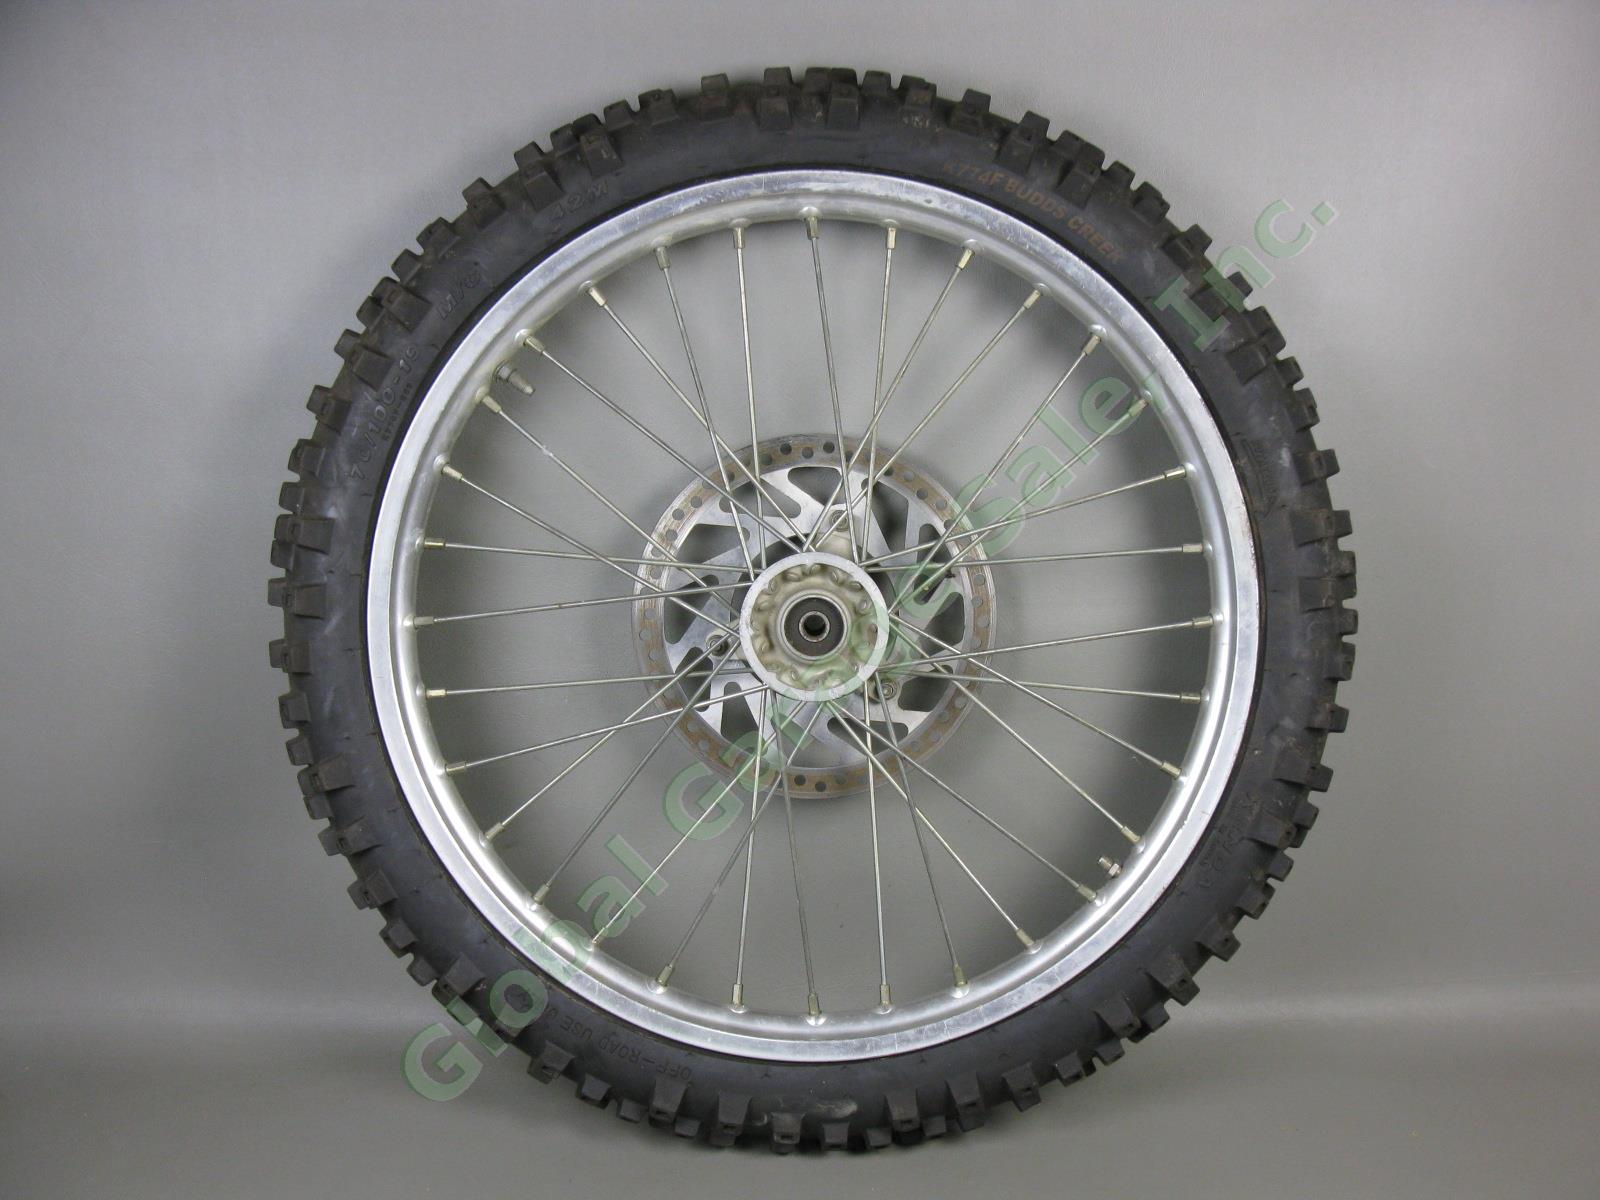 Talon Excel Takasago YZ85 Big Wheel J 19x1.40 Front Rim Kenda 70/100-19 M/C Tire 2